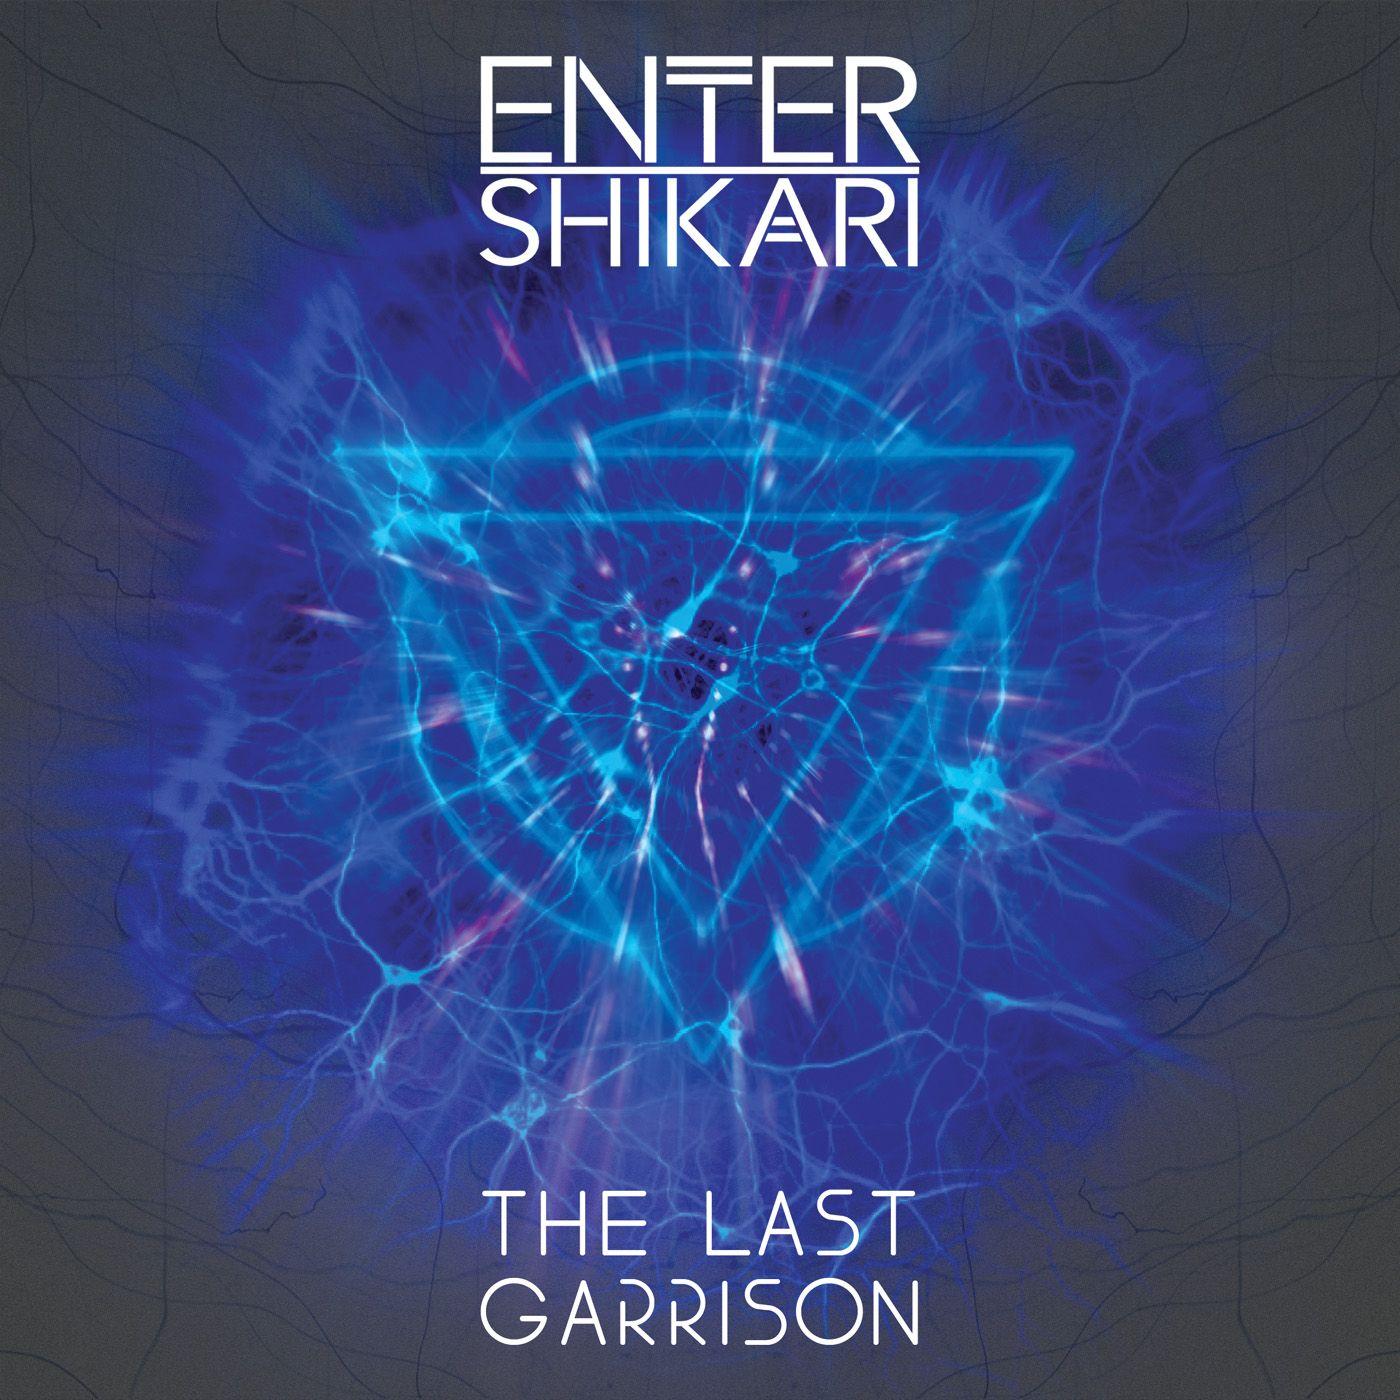 Enter shikari 2015 album picture image clip art black